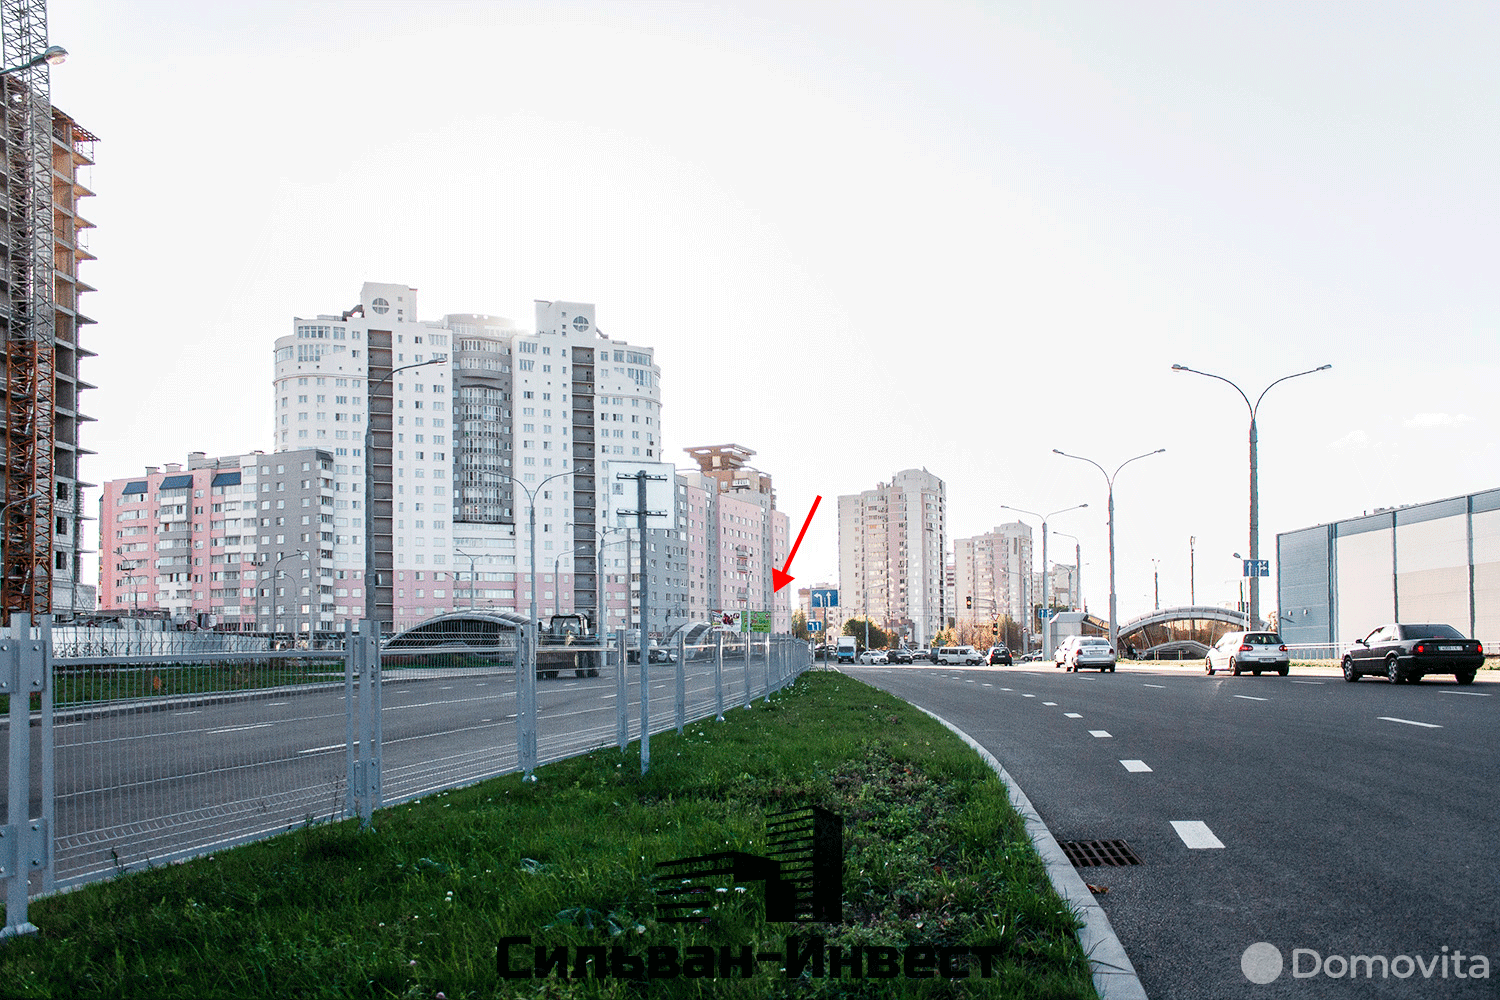 Аренда торговой точки на Игуменский тр-т, д. 16 в Минске, 2367EUR, код 964277 - фото 3